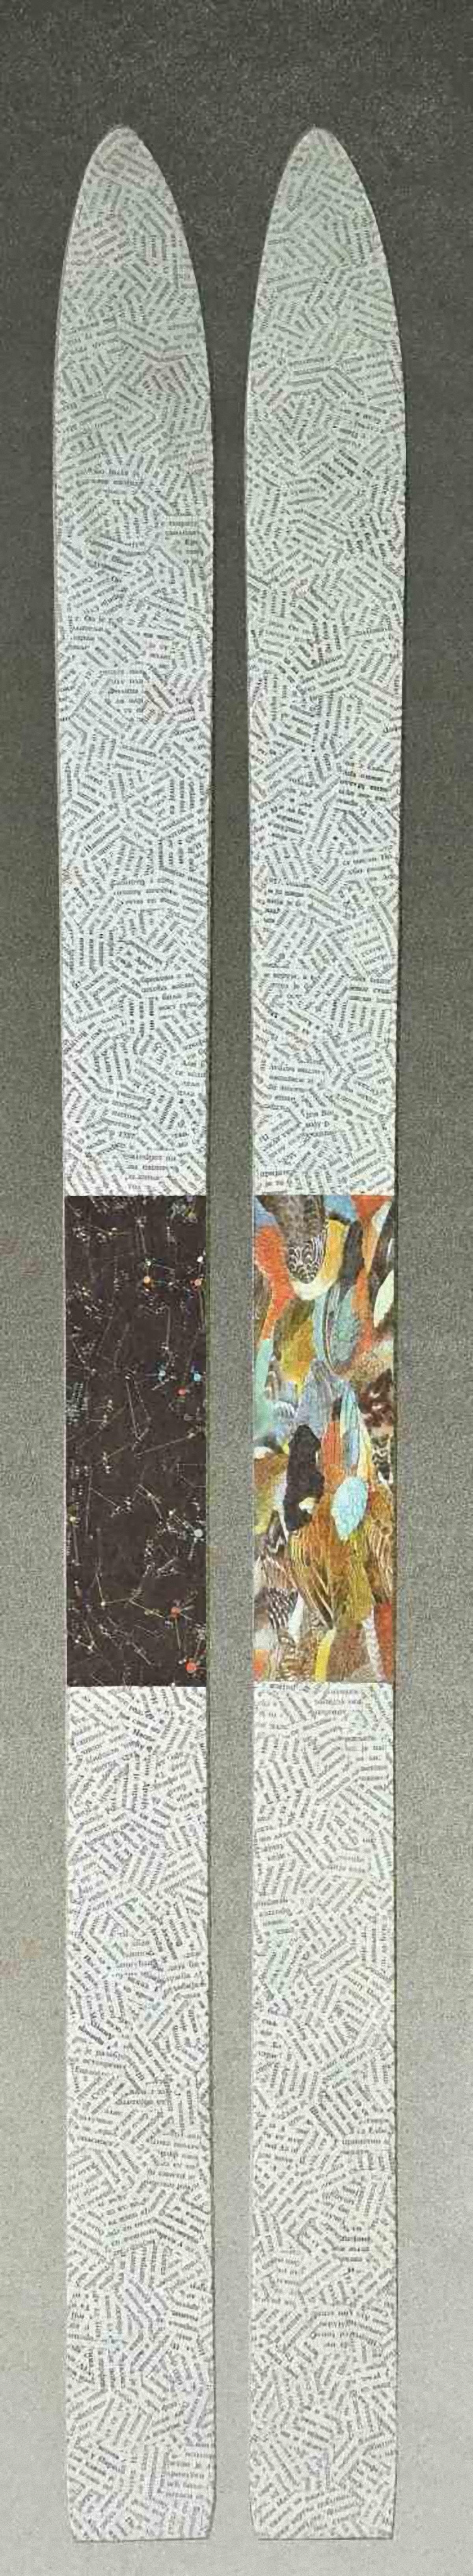 Unknown Landscape Print - Composition - Lithograph by Jiri Kolar - 1983